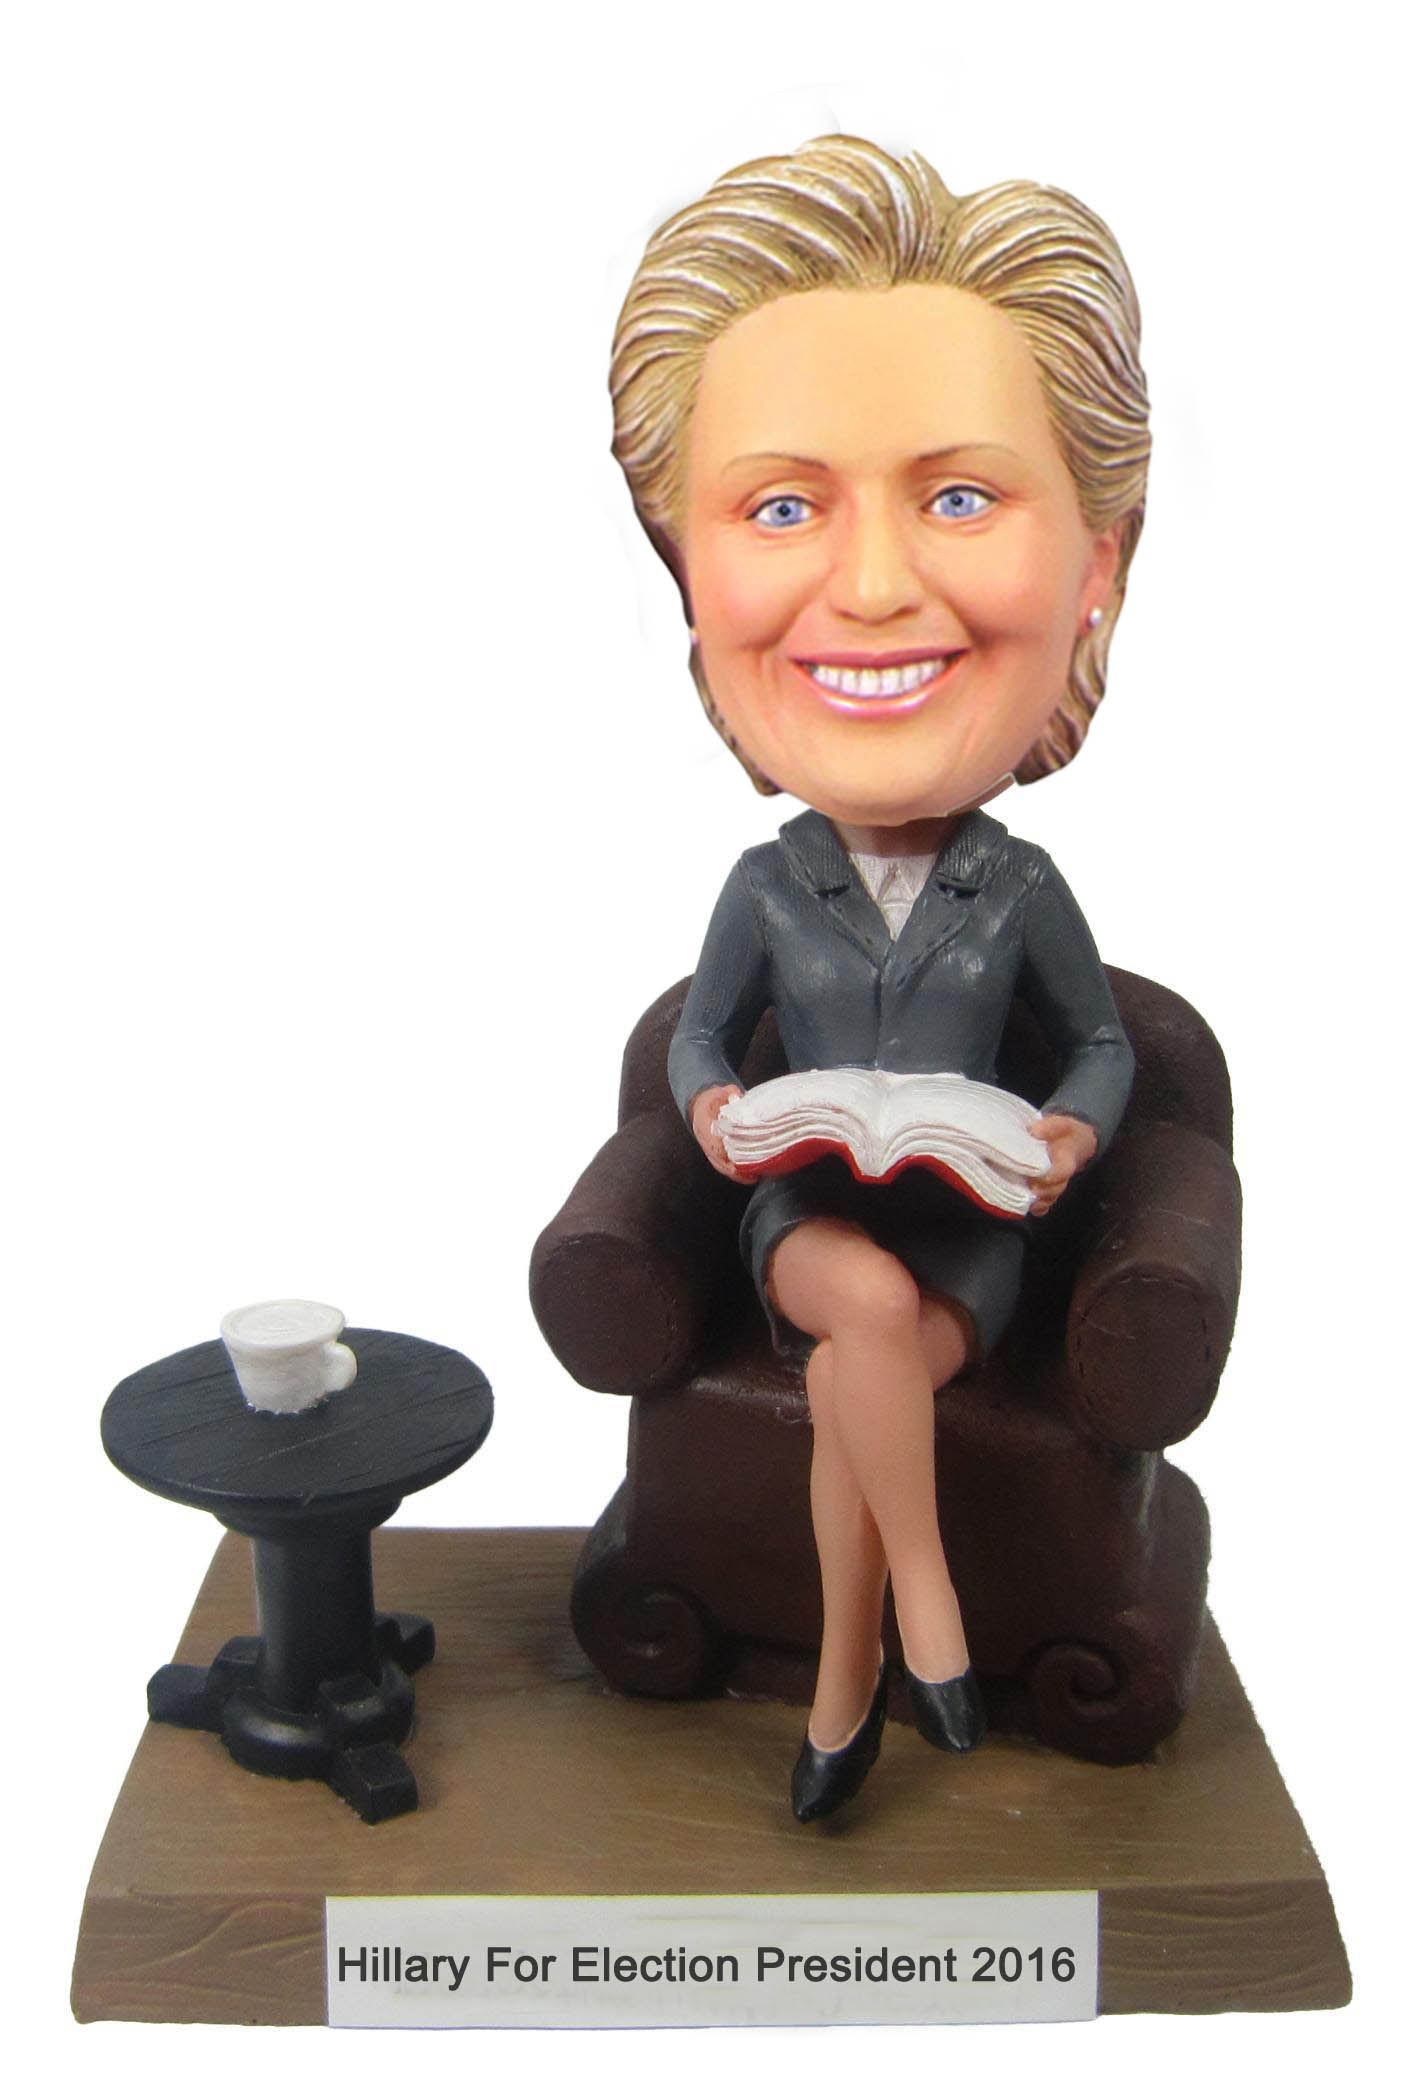 Hillary for election president 2016: Hillary clinton polymer clay dolls